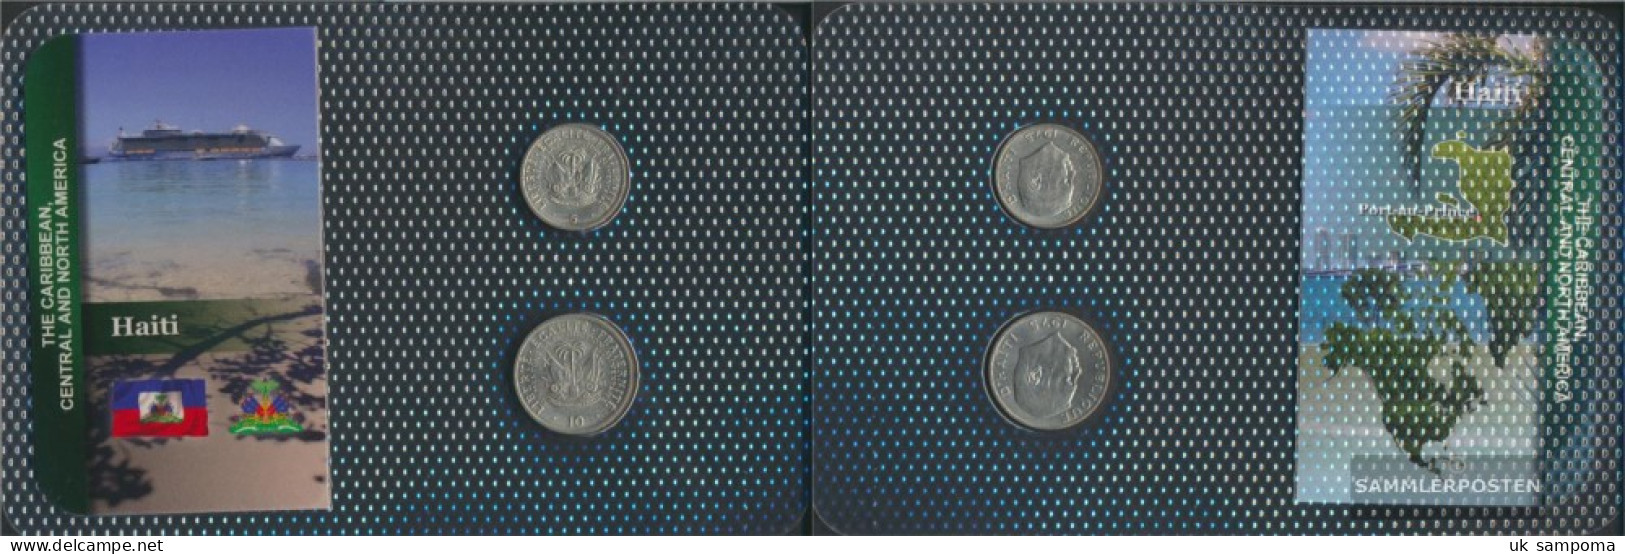 Haiti 1975 Stgl./unzirkuliert Kursmünzen Stgl./unzirkuliert 1975 5 Centimes Until 10 Centimes - Haiti